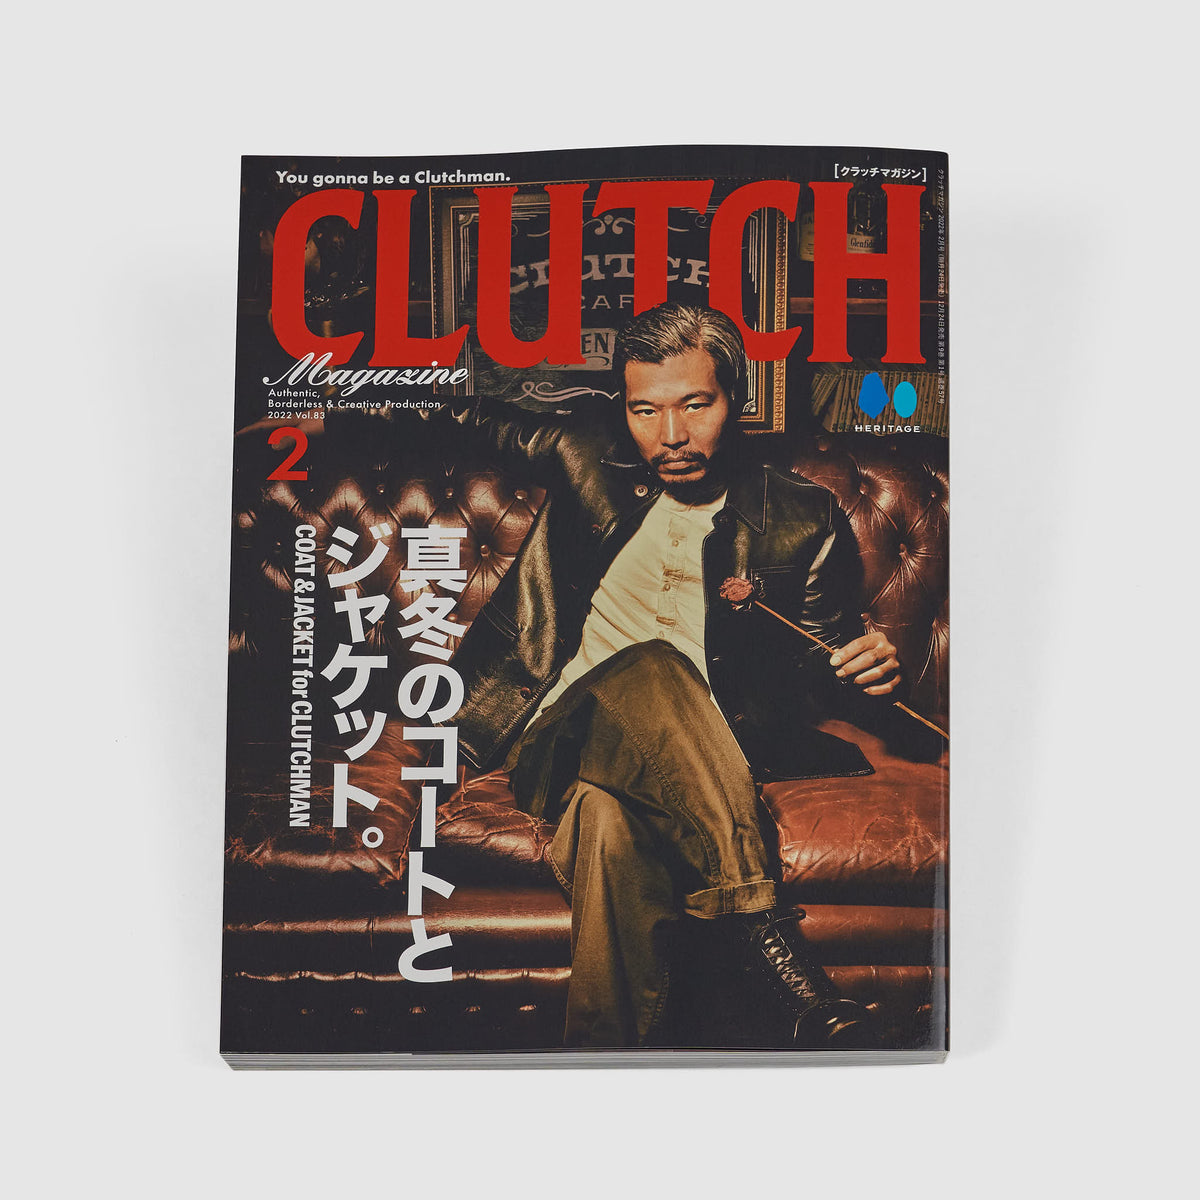 Men&#39;s File Magazine Vol. 25 plus Clutch Magazine Vol. 83